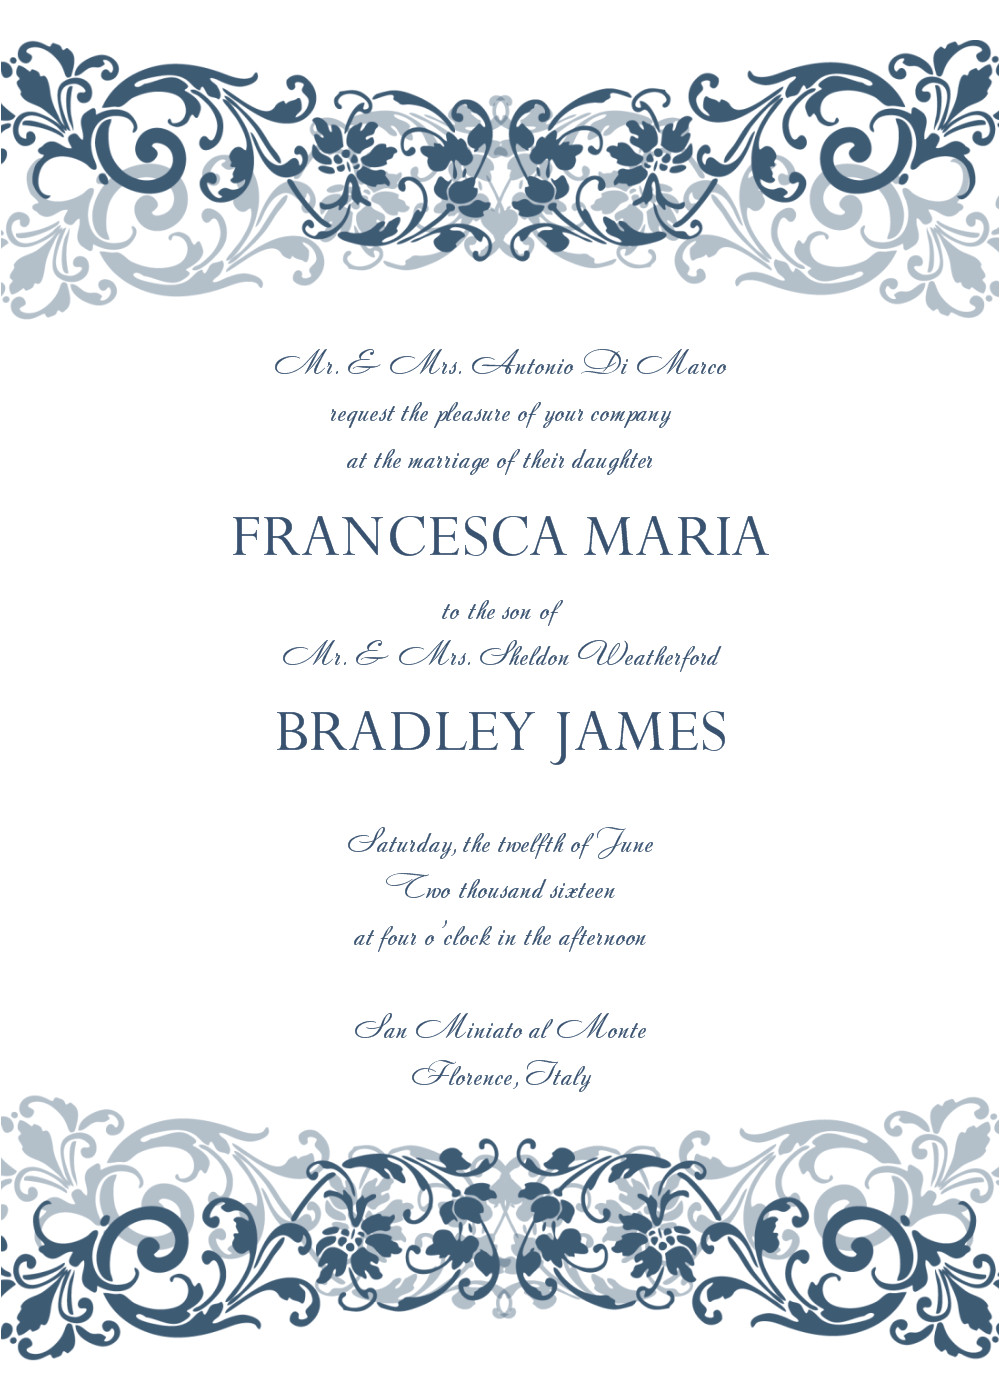 Wedding Invitation Template HTML 8 Free Wedding Invitation Templates Excel Pdf formats